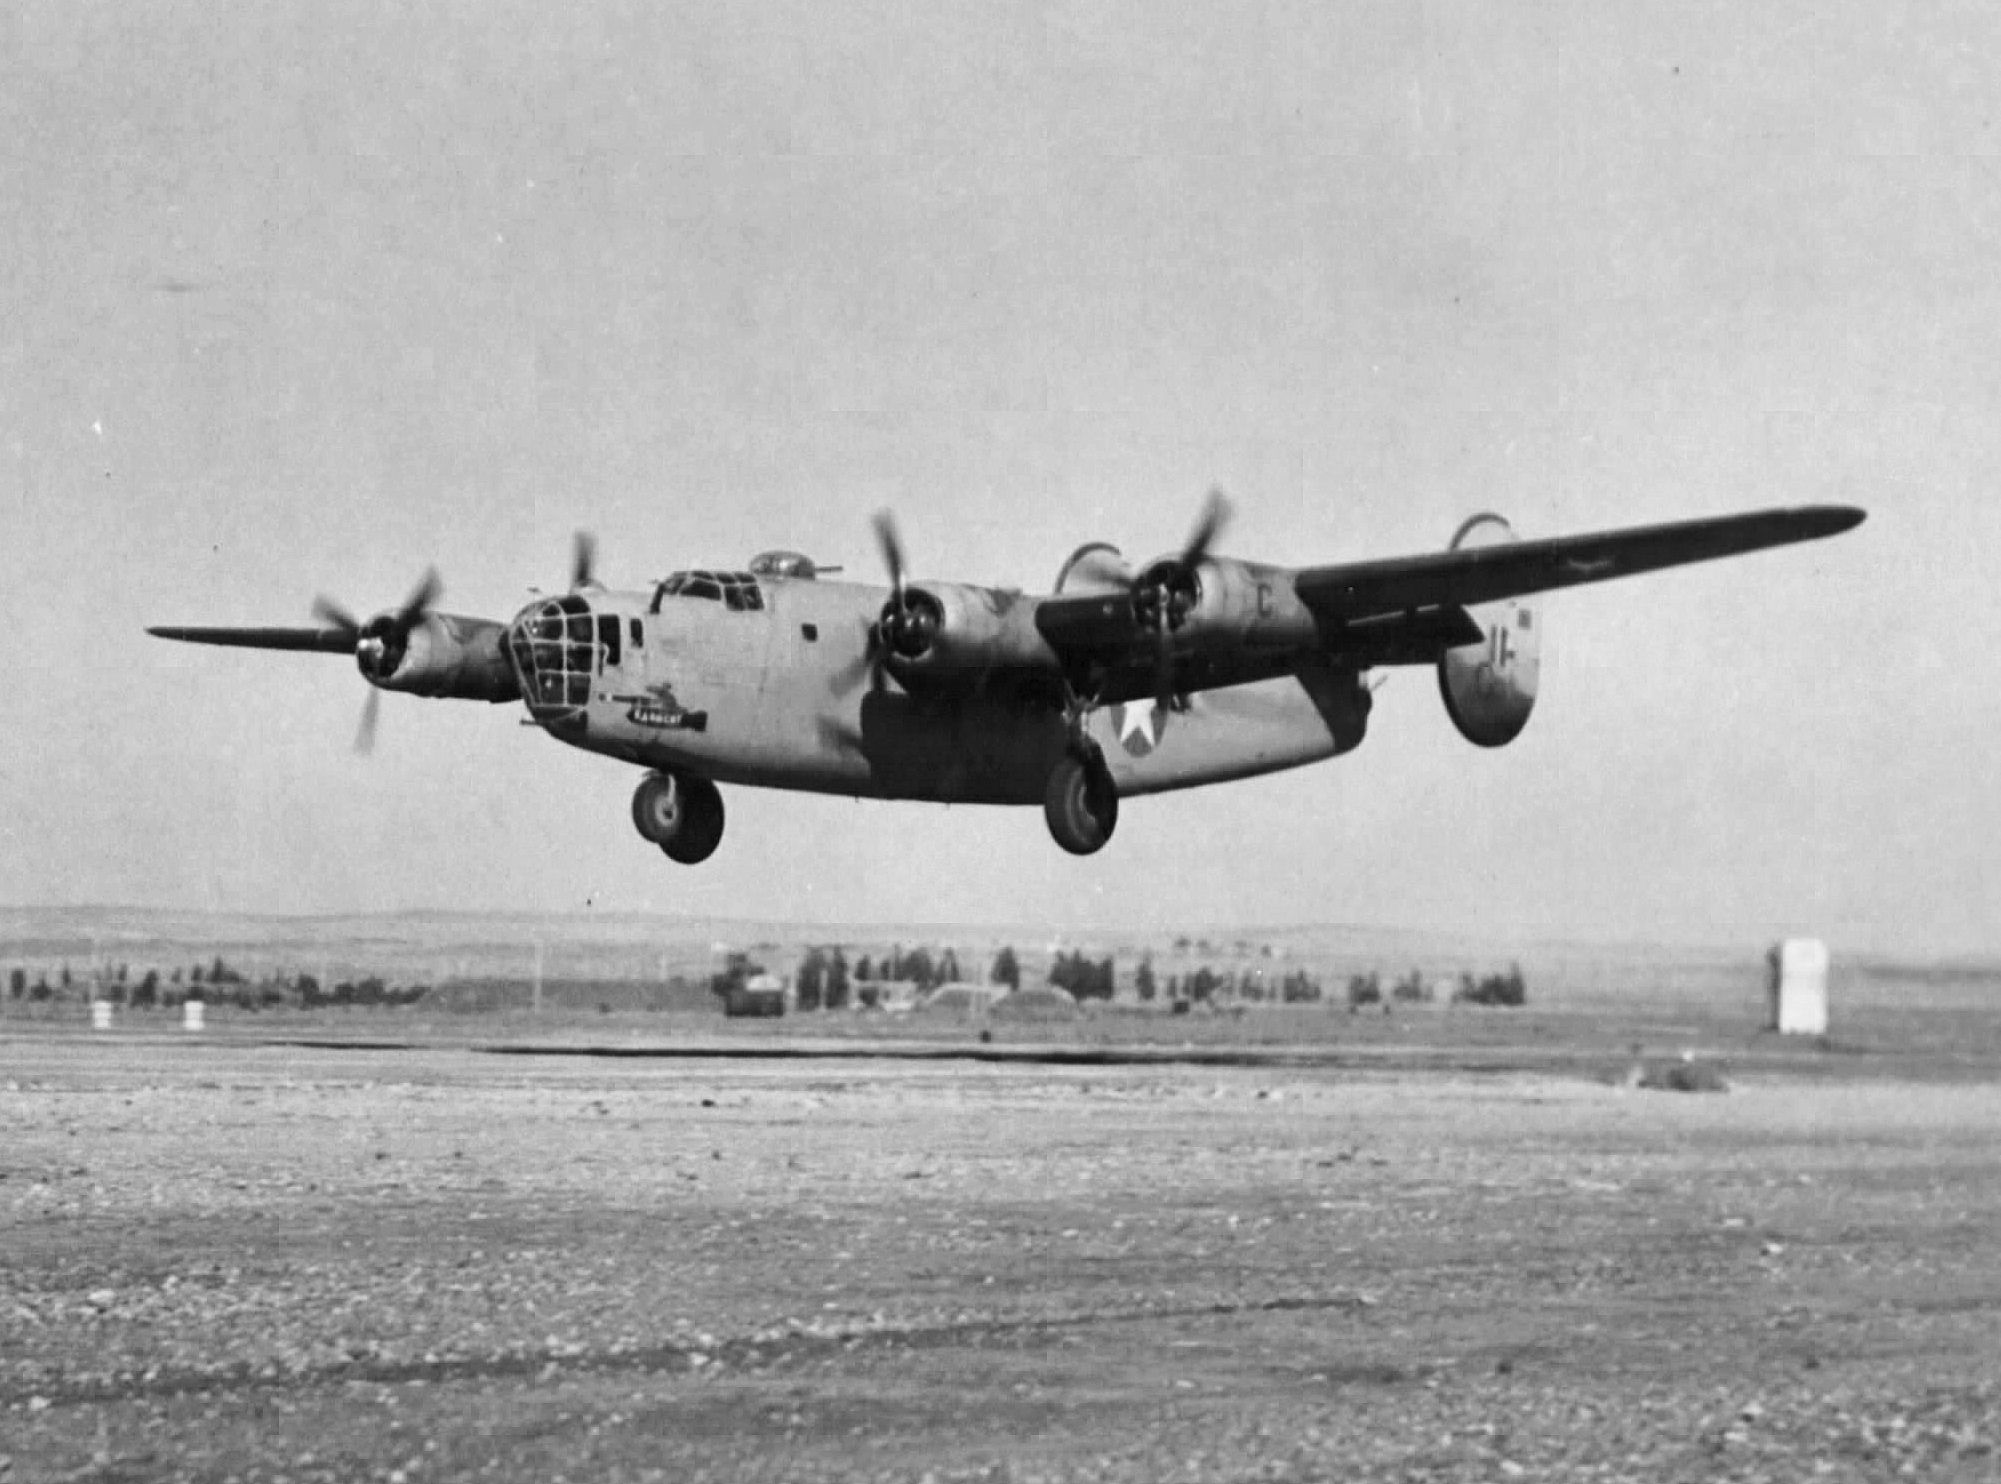 Un bombardier B-24 américain en plein vol en 1943.